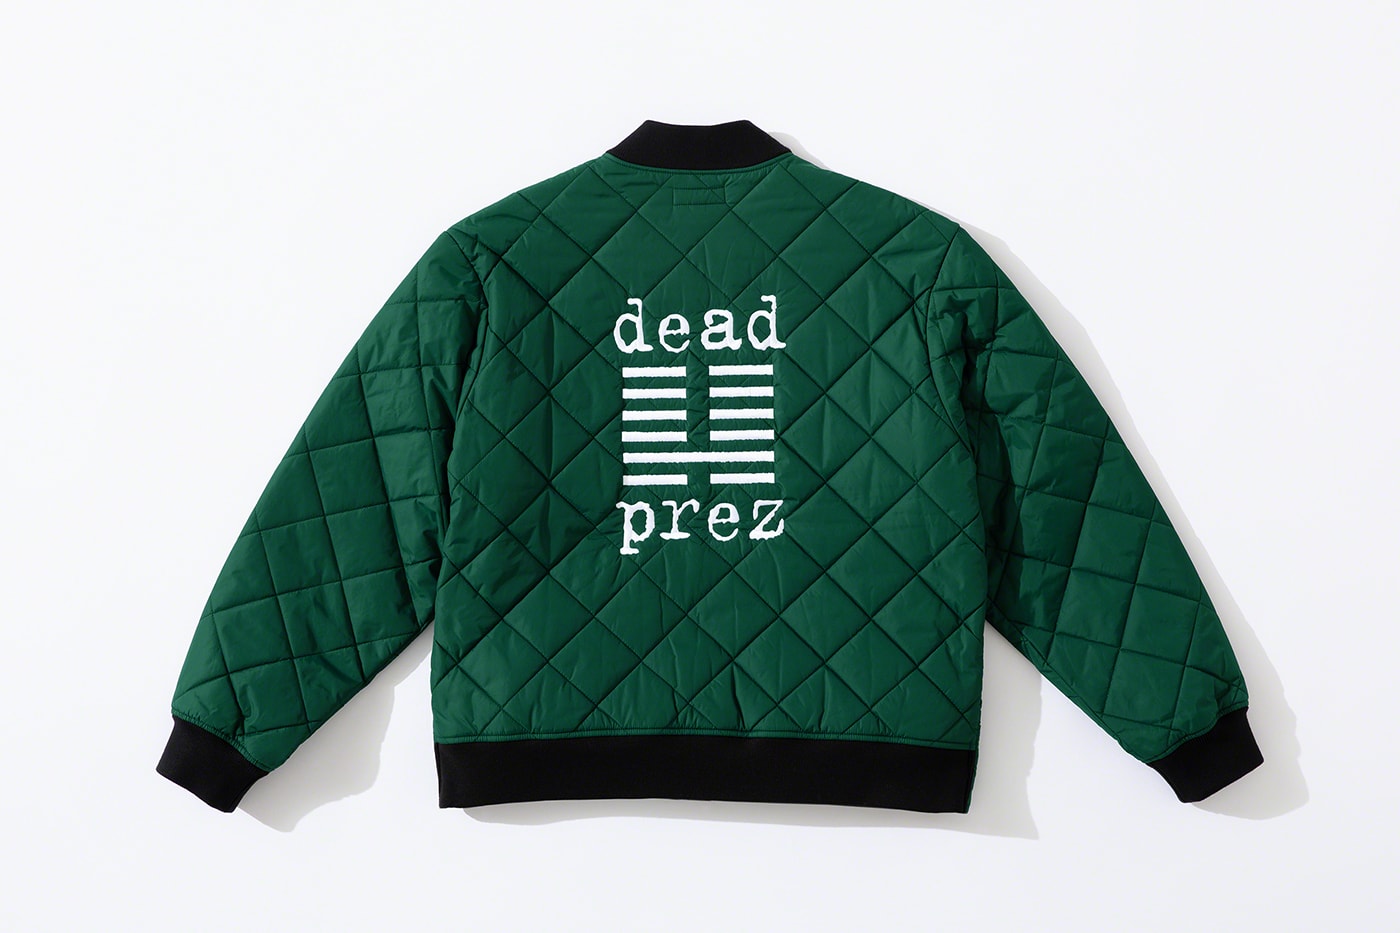 Supreme x dead prez Fall 2019 collaboration hip hop new york supreme jackets hat accessories lookbooks 